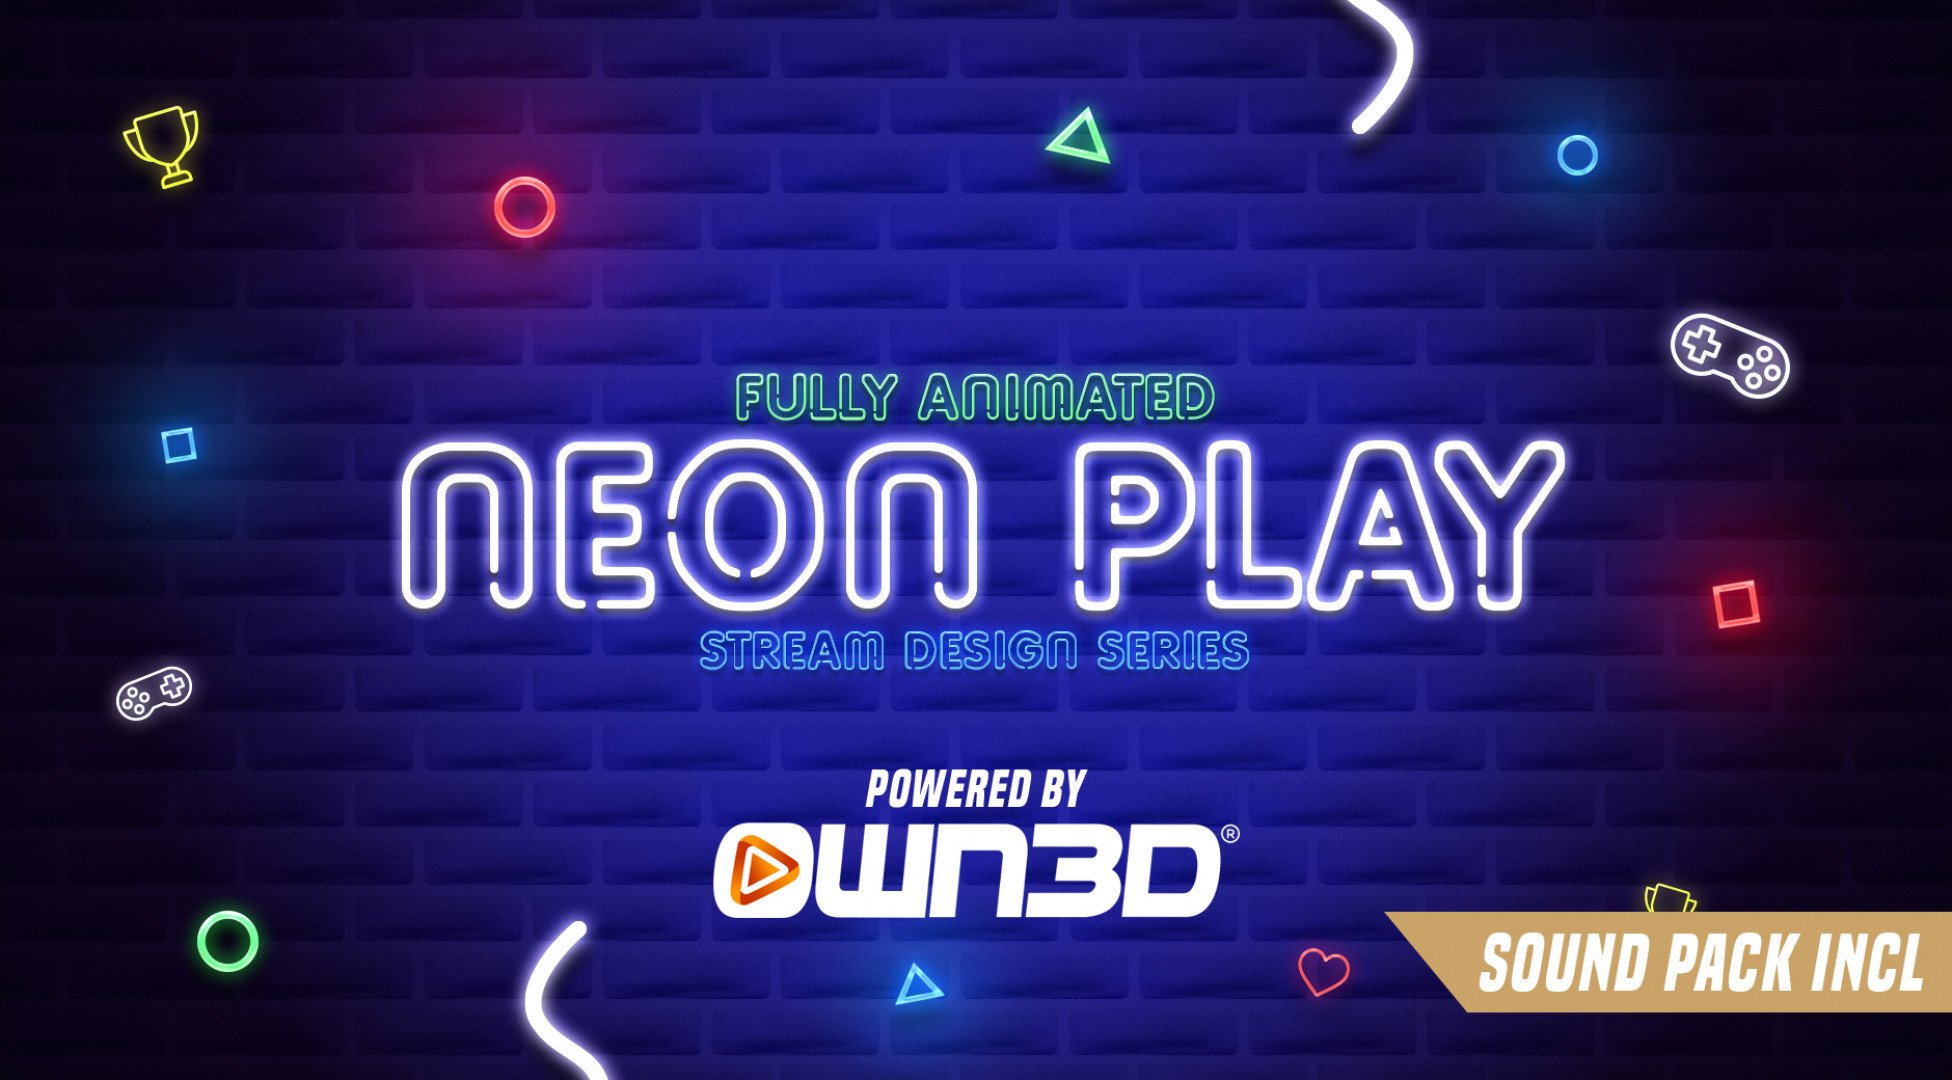 NeonPlay